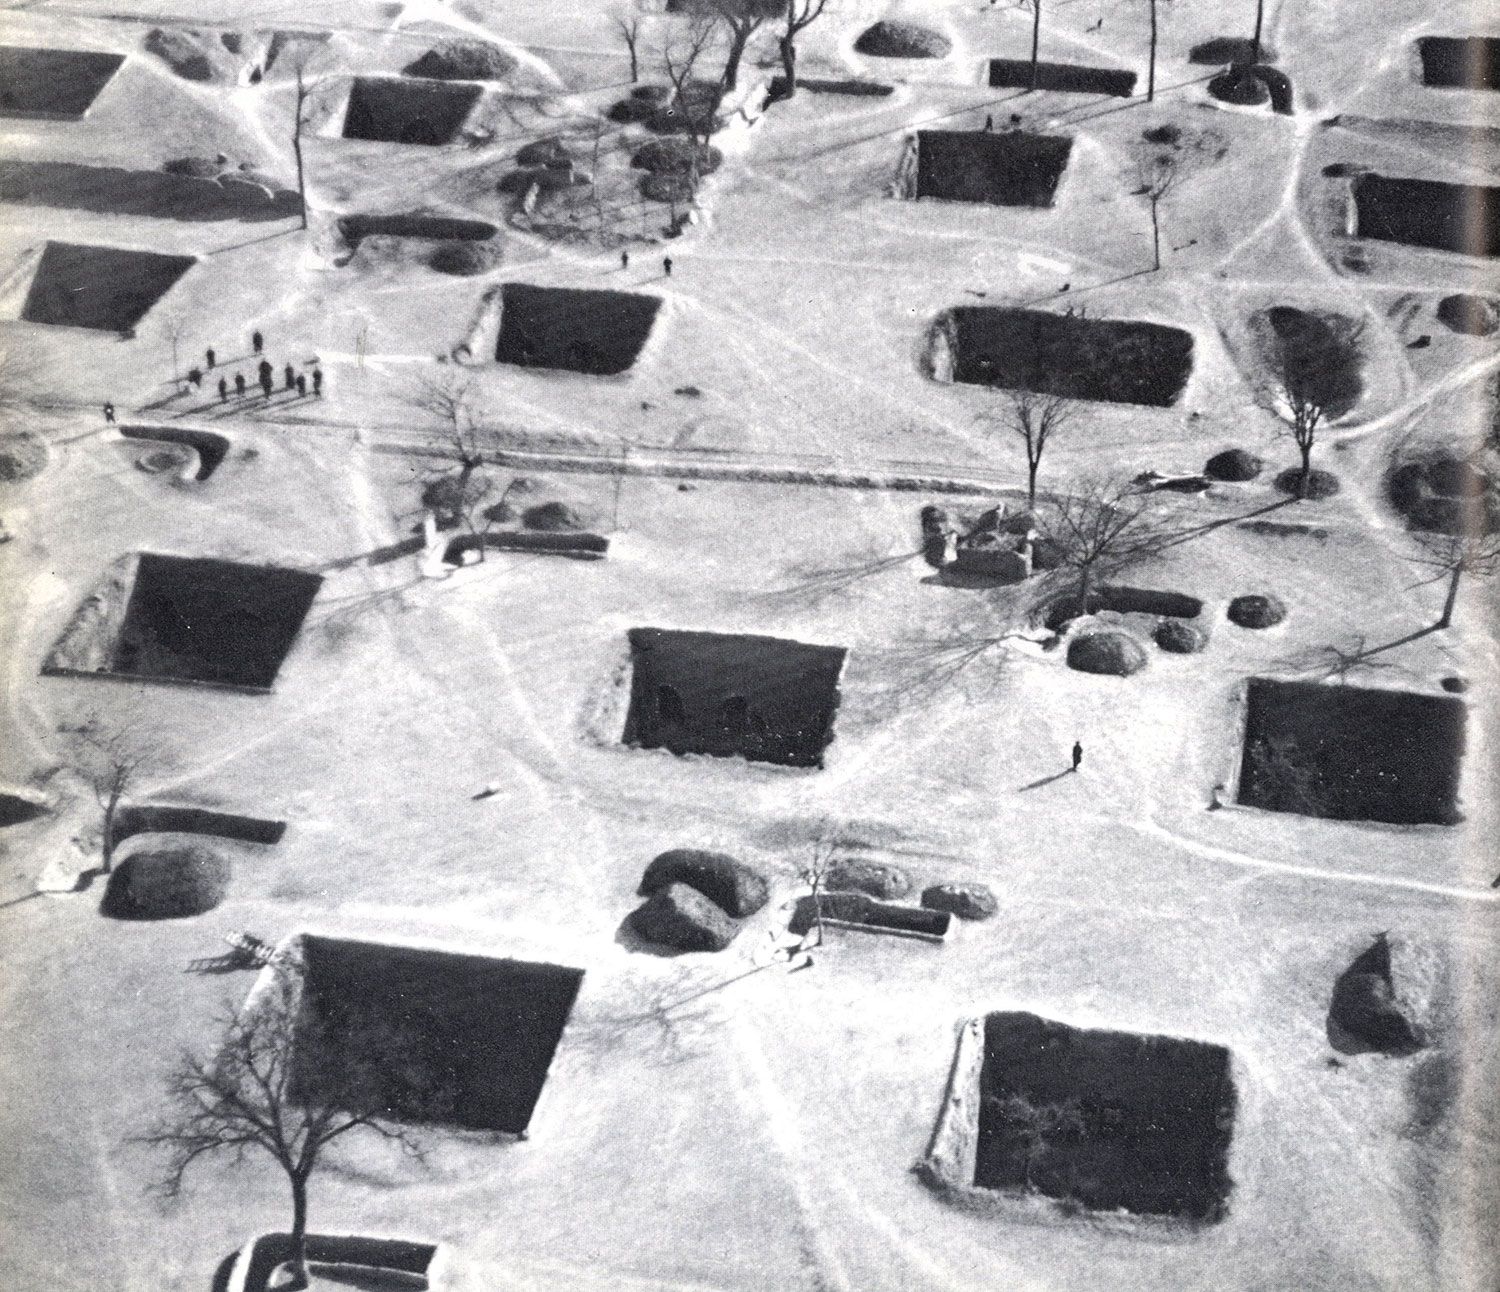 Patios rectangulares de casas cueva. Créditos: Bernard Rudofsky, Architecture Without Architects, 1964.